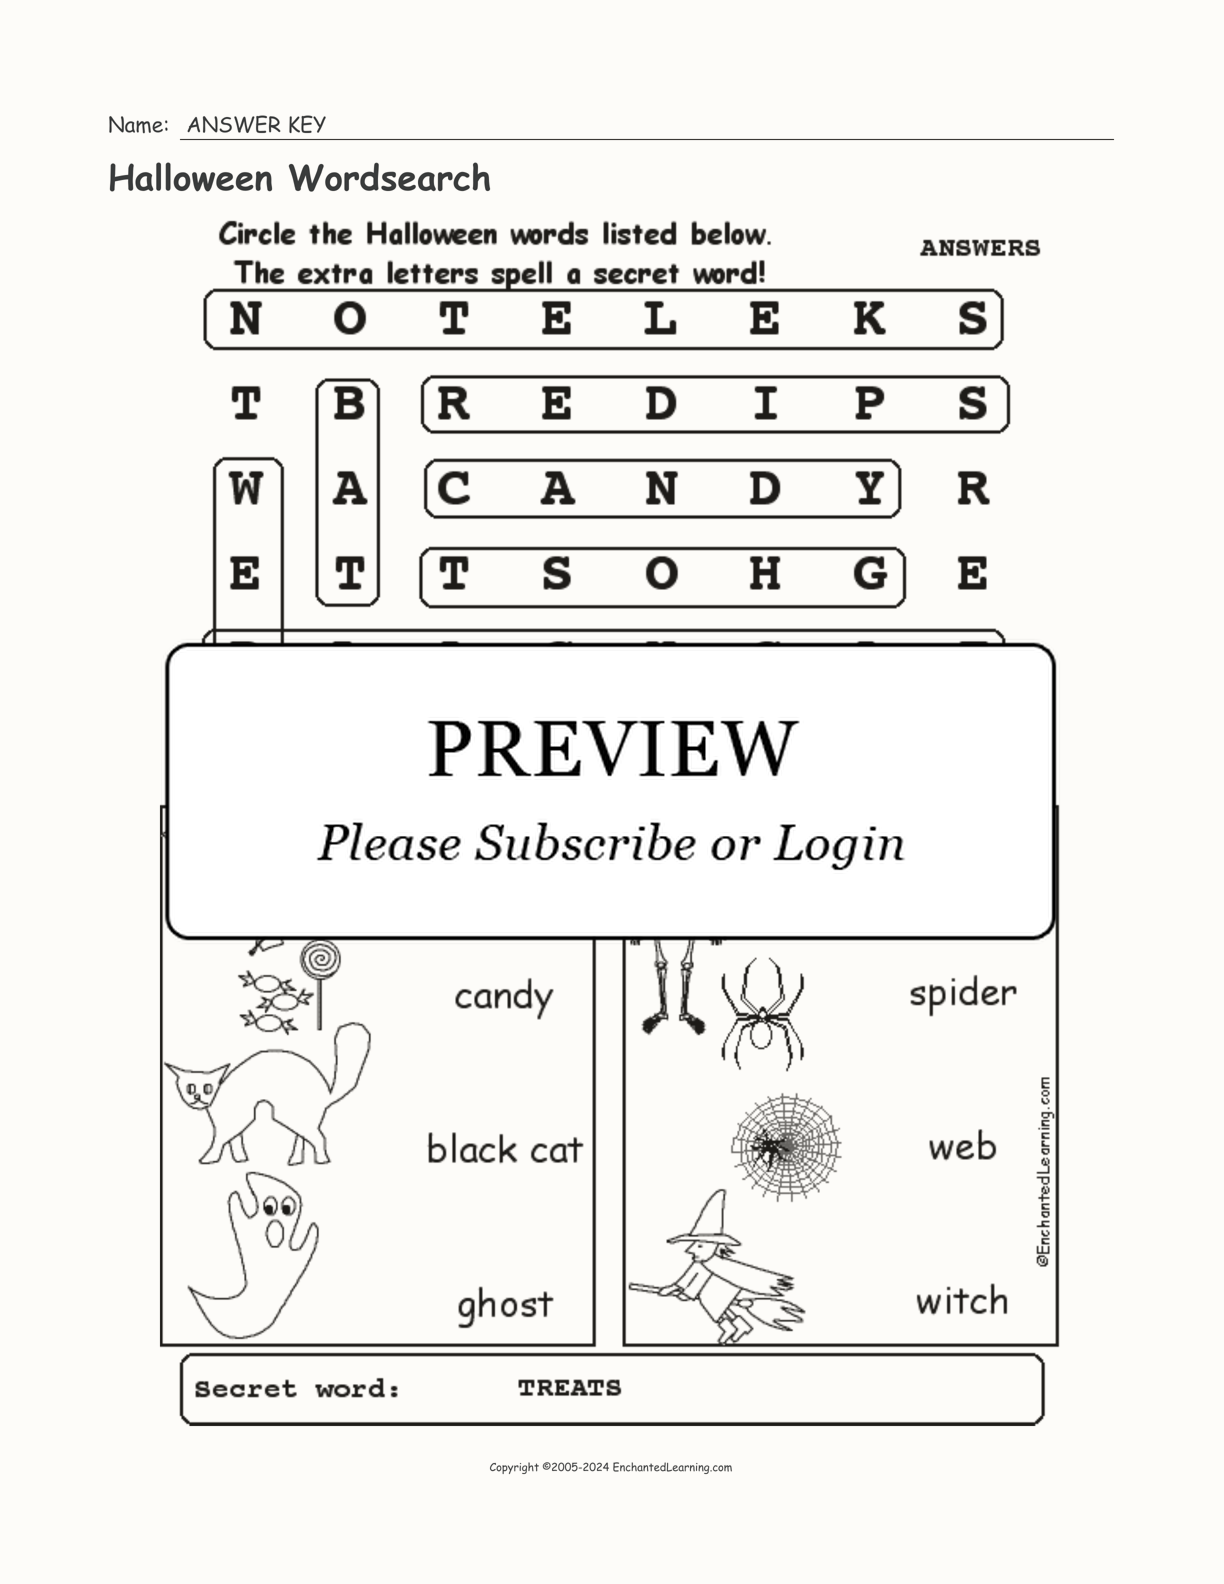 Halloween Wordsearch interactive worksheet page 2